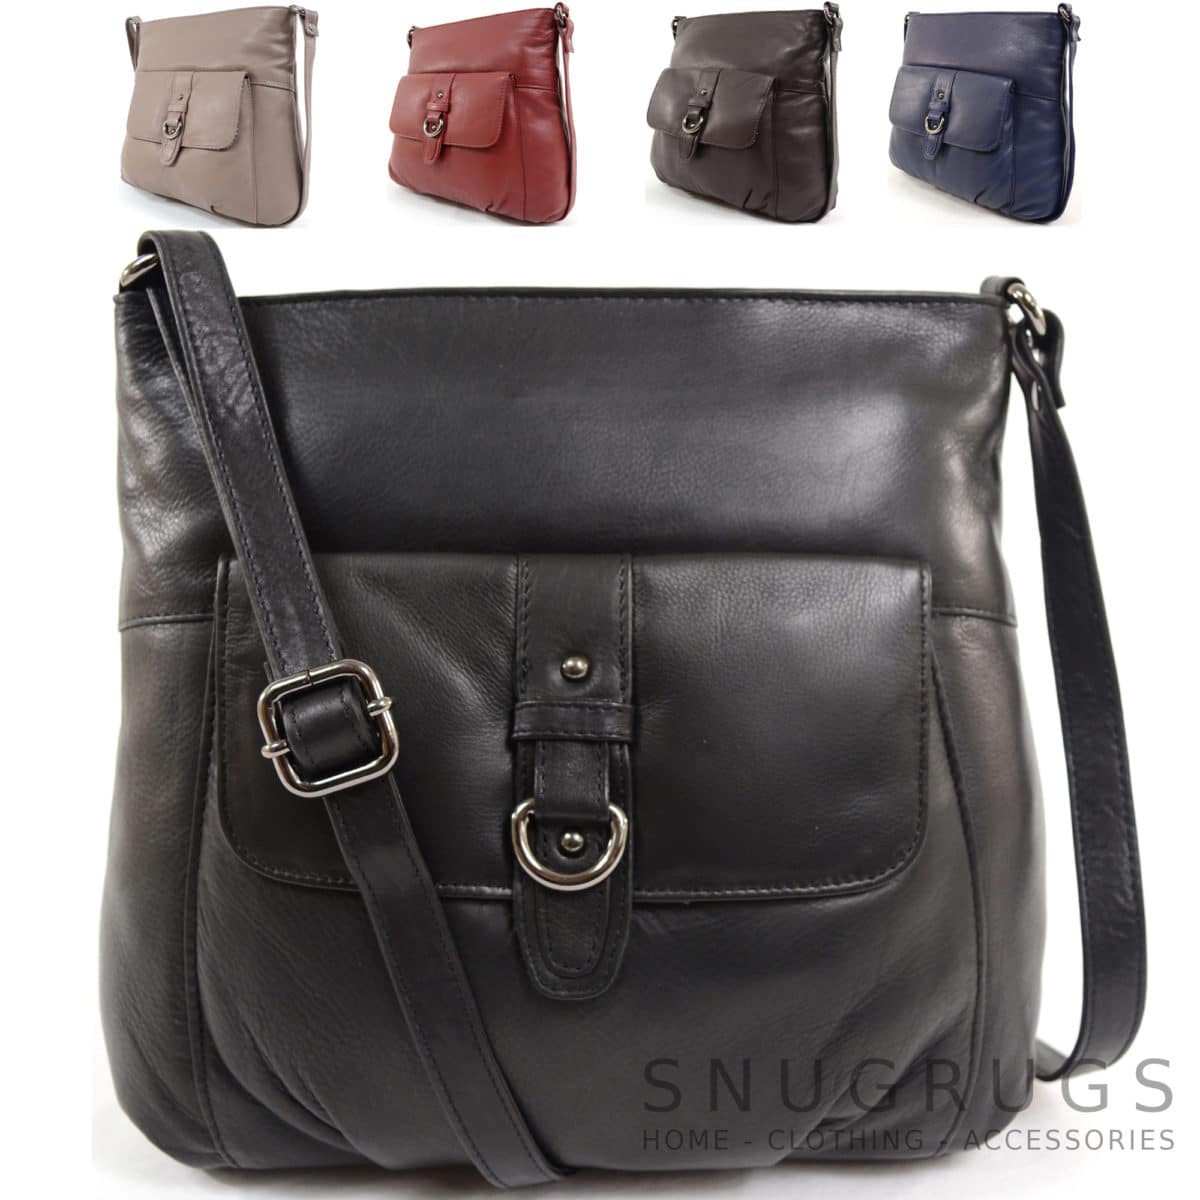 Jackie - Soft Leather Shoulder / Cross Body Bag - Snugrugs